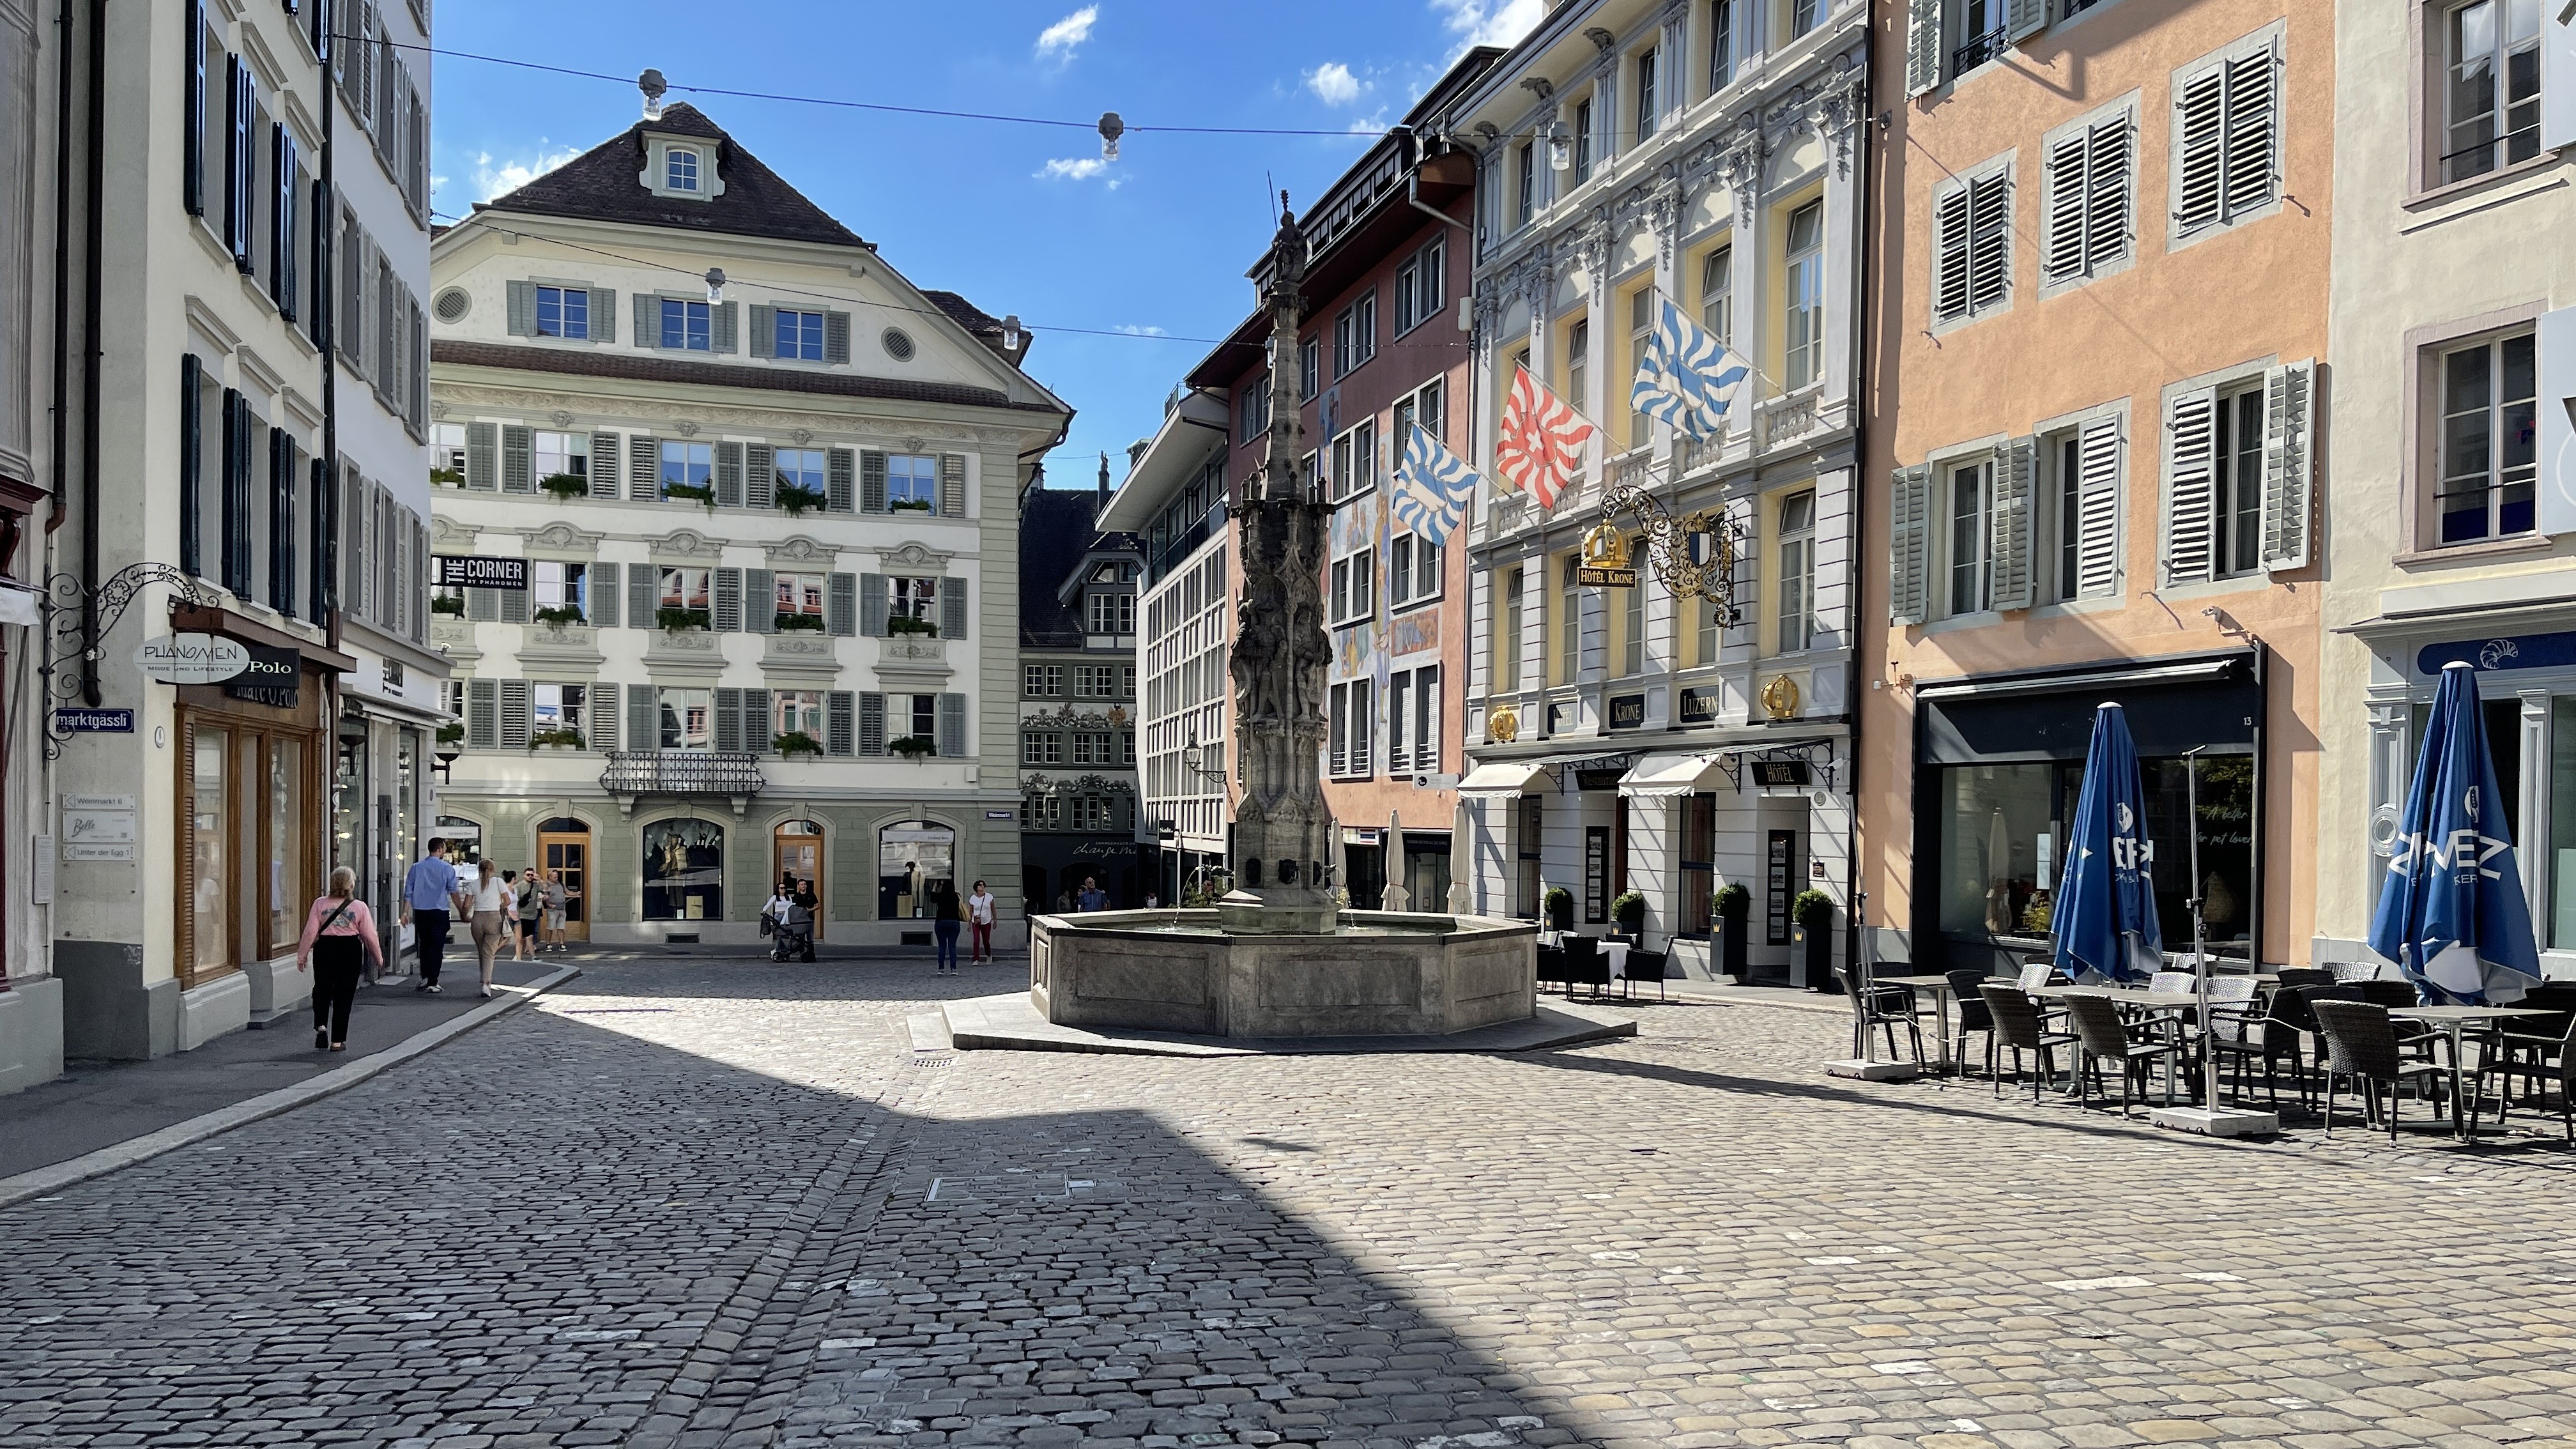 Around Town - Senior Trip to Lucerne